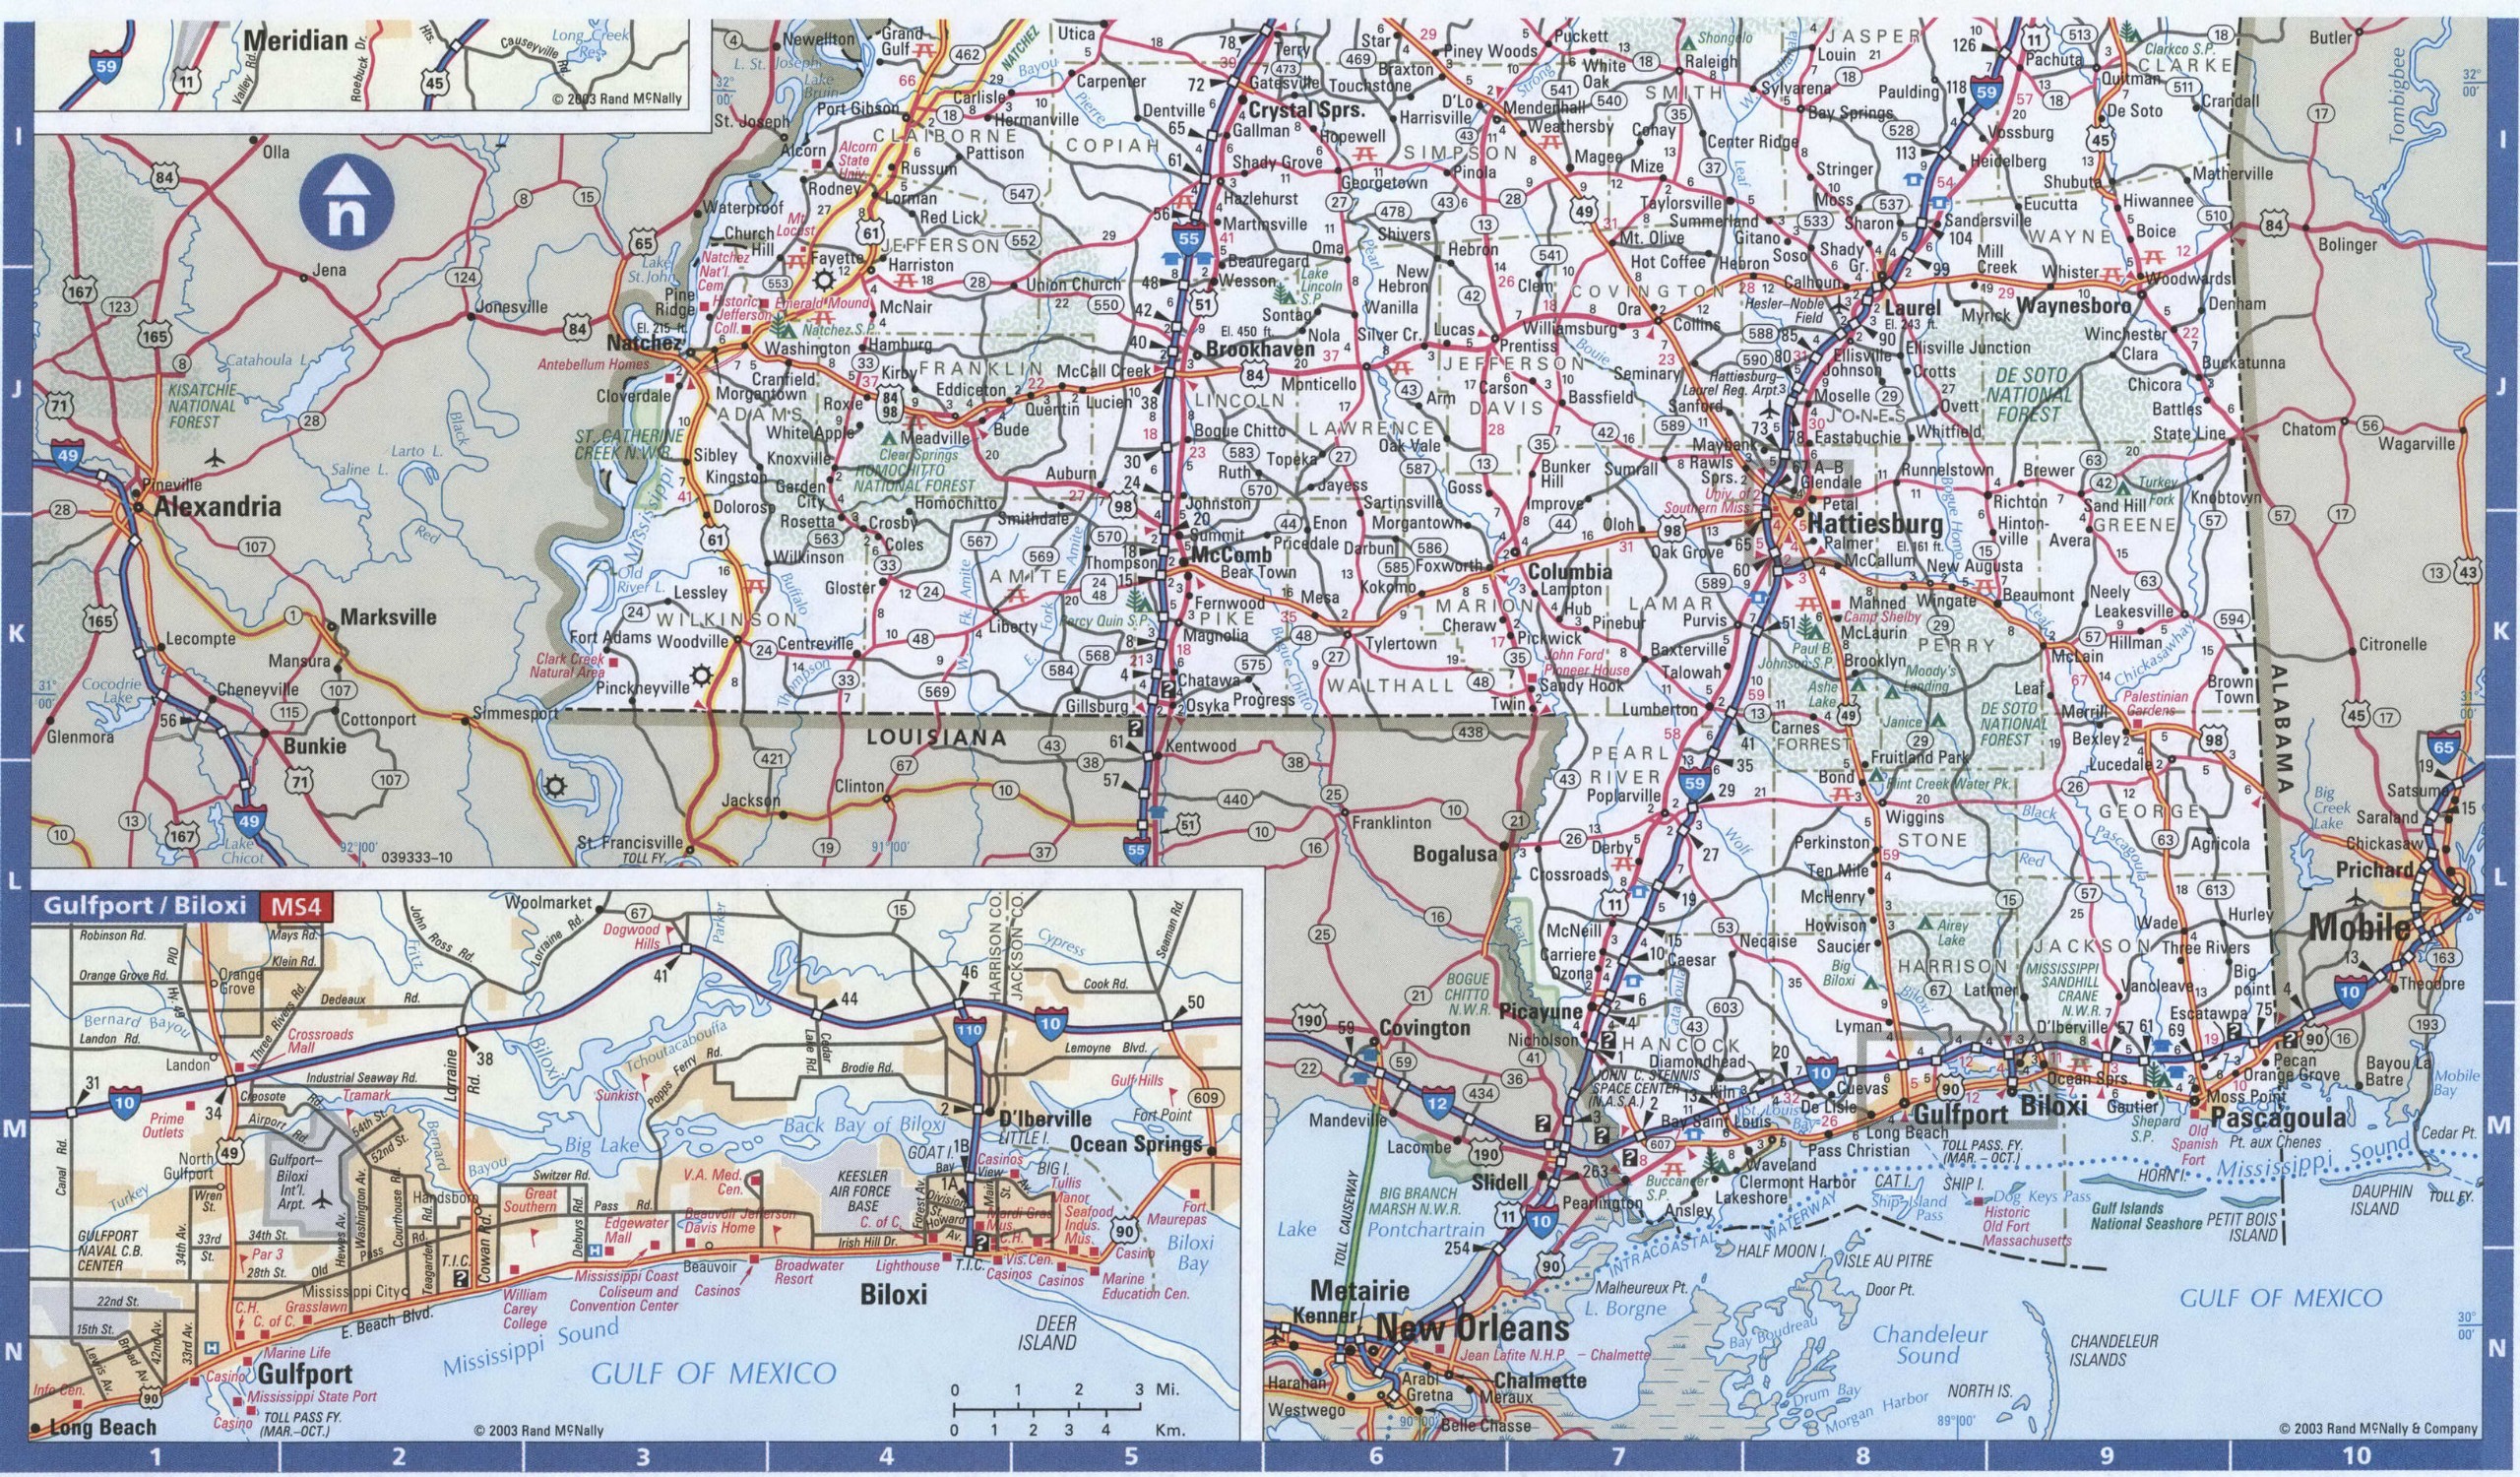 Mississippi road map